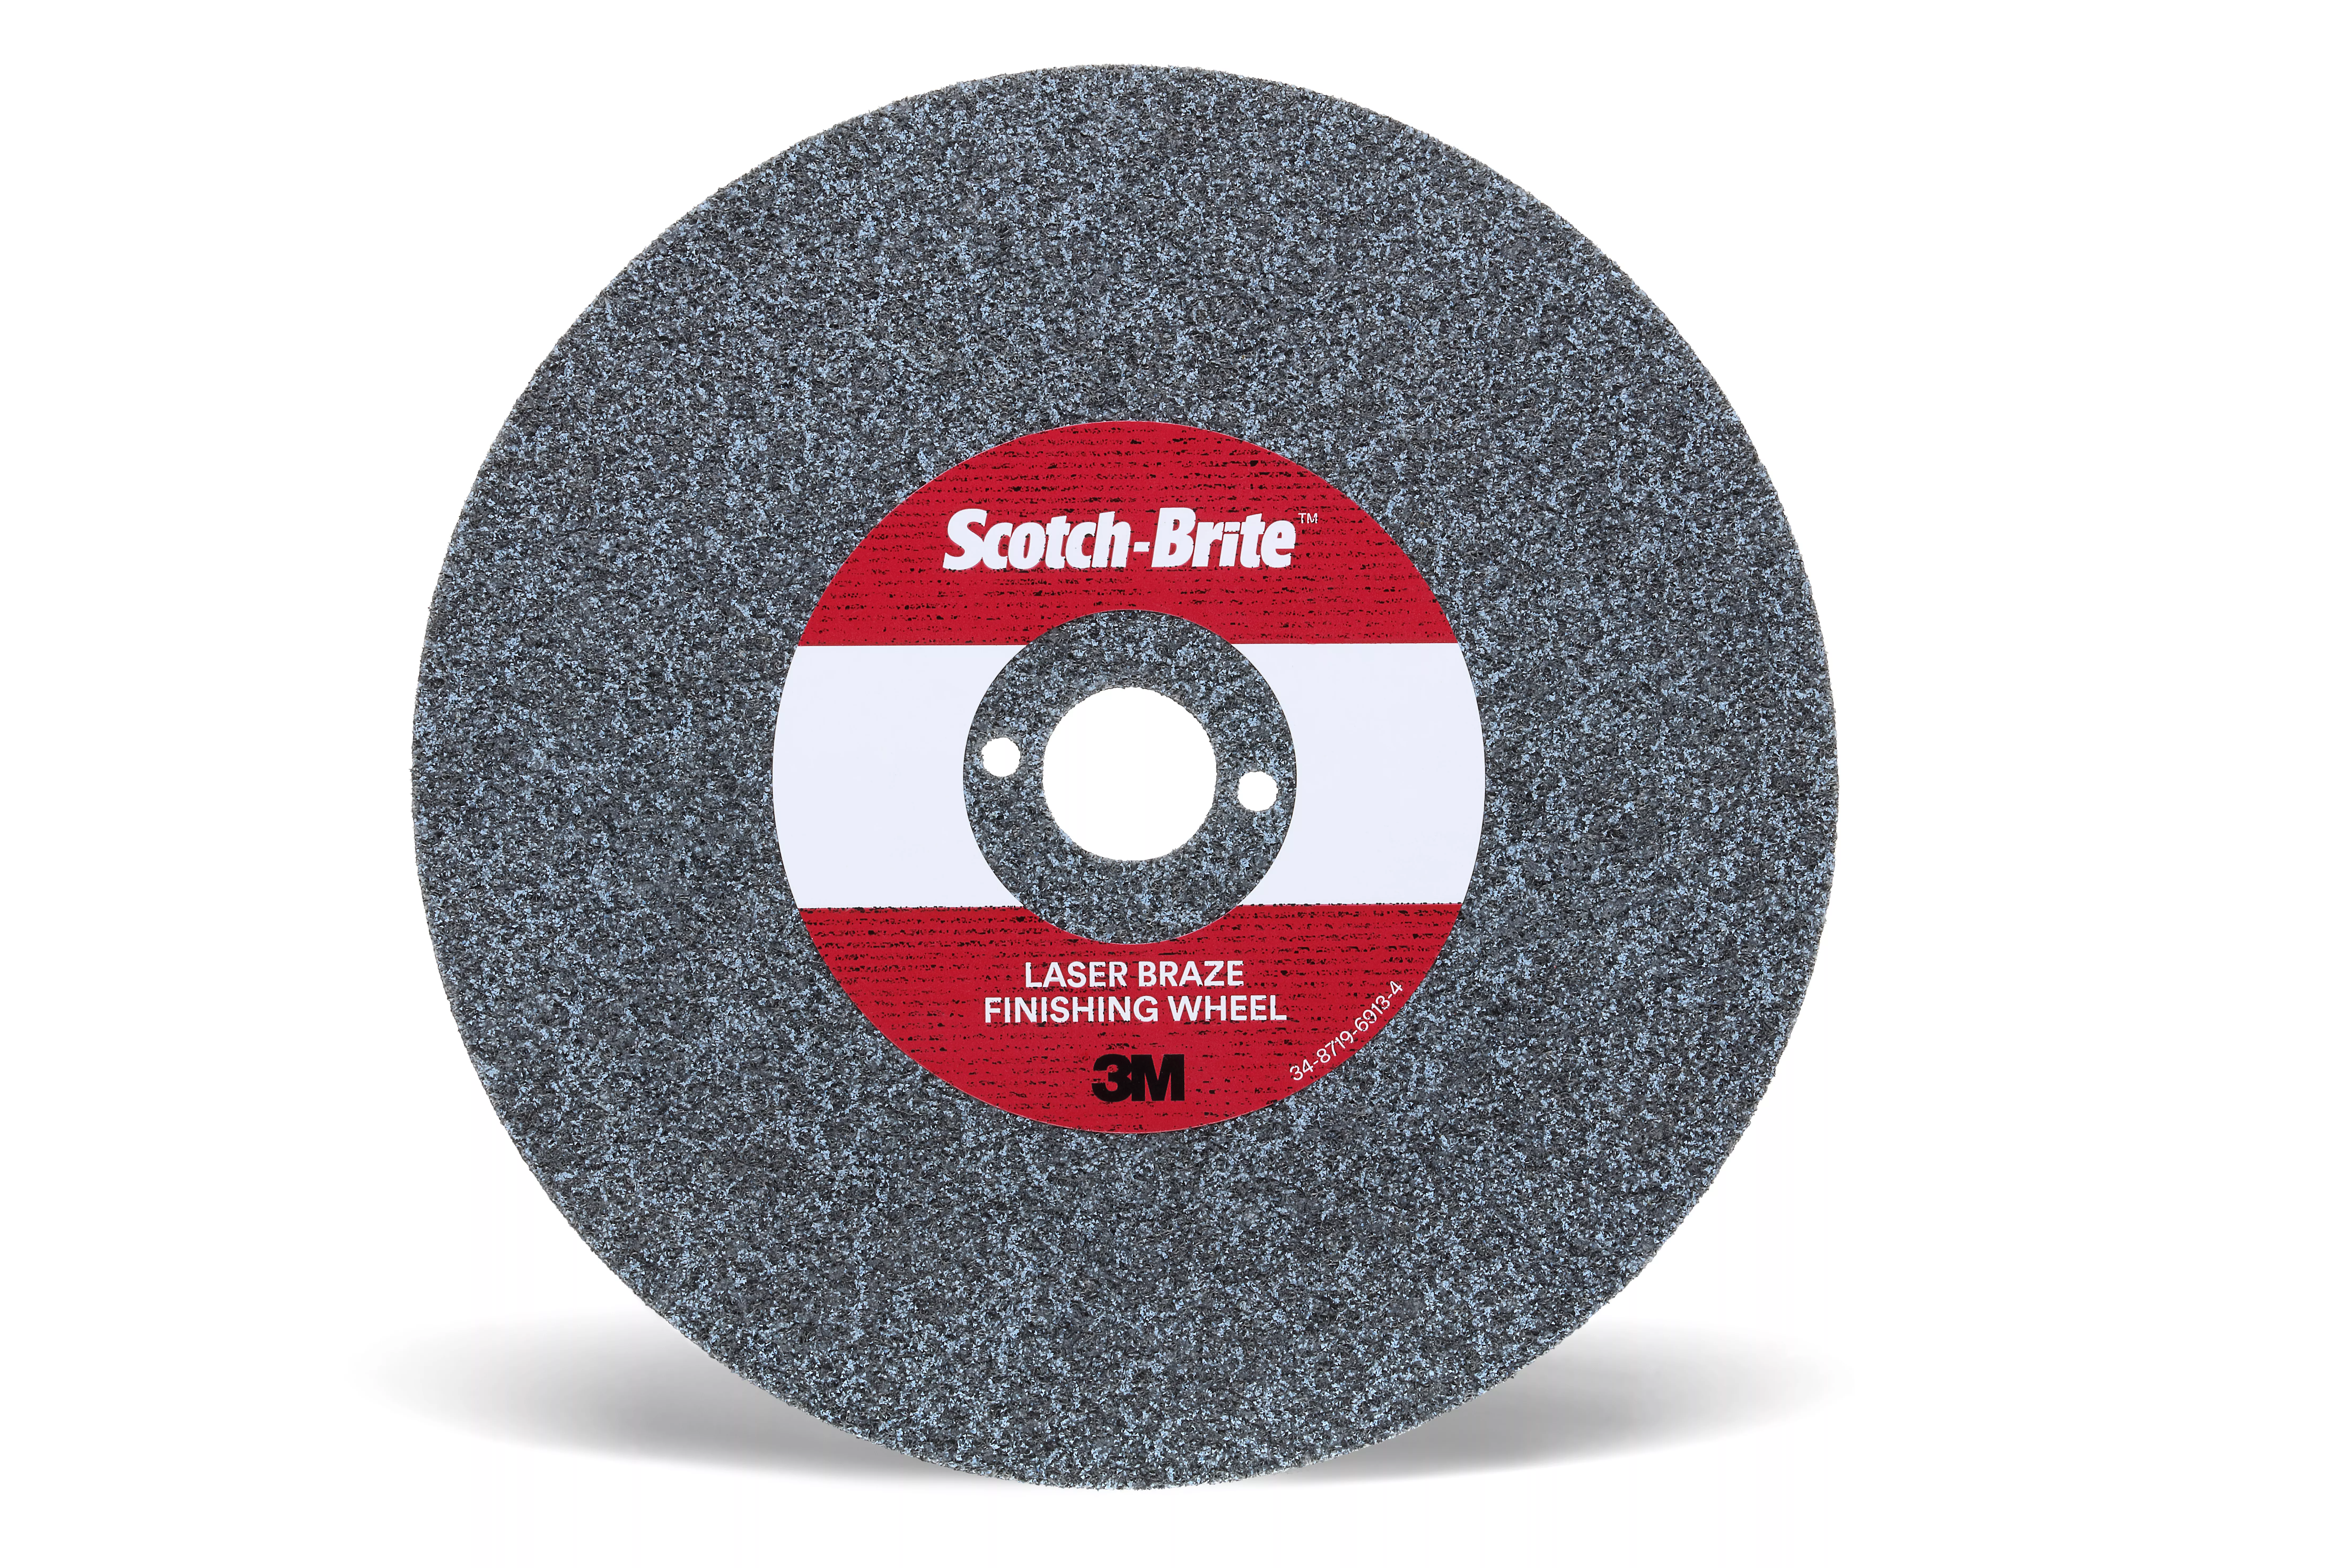 SKU 7100117439 | Scotch-Brite™ Laser Braze Finishing Wheel